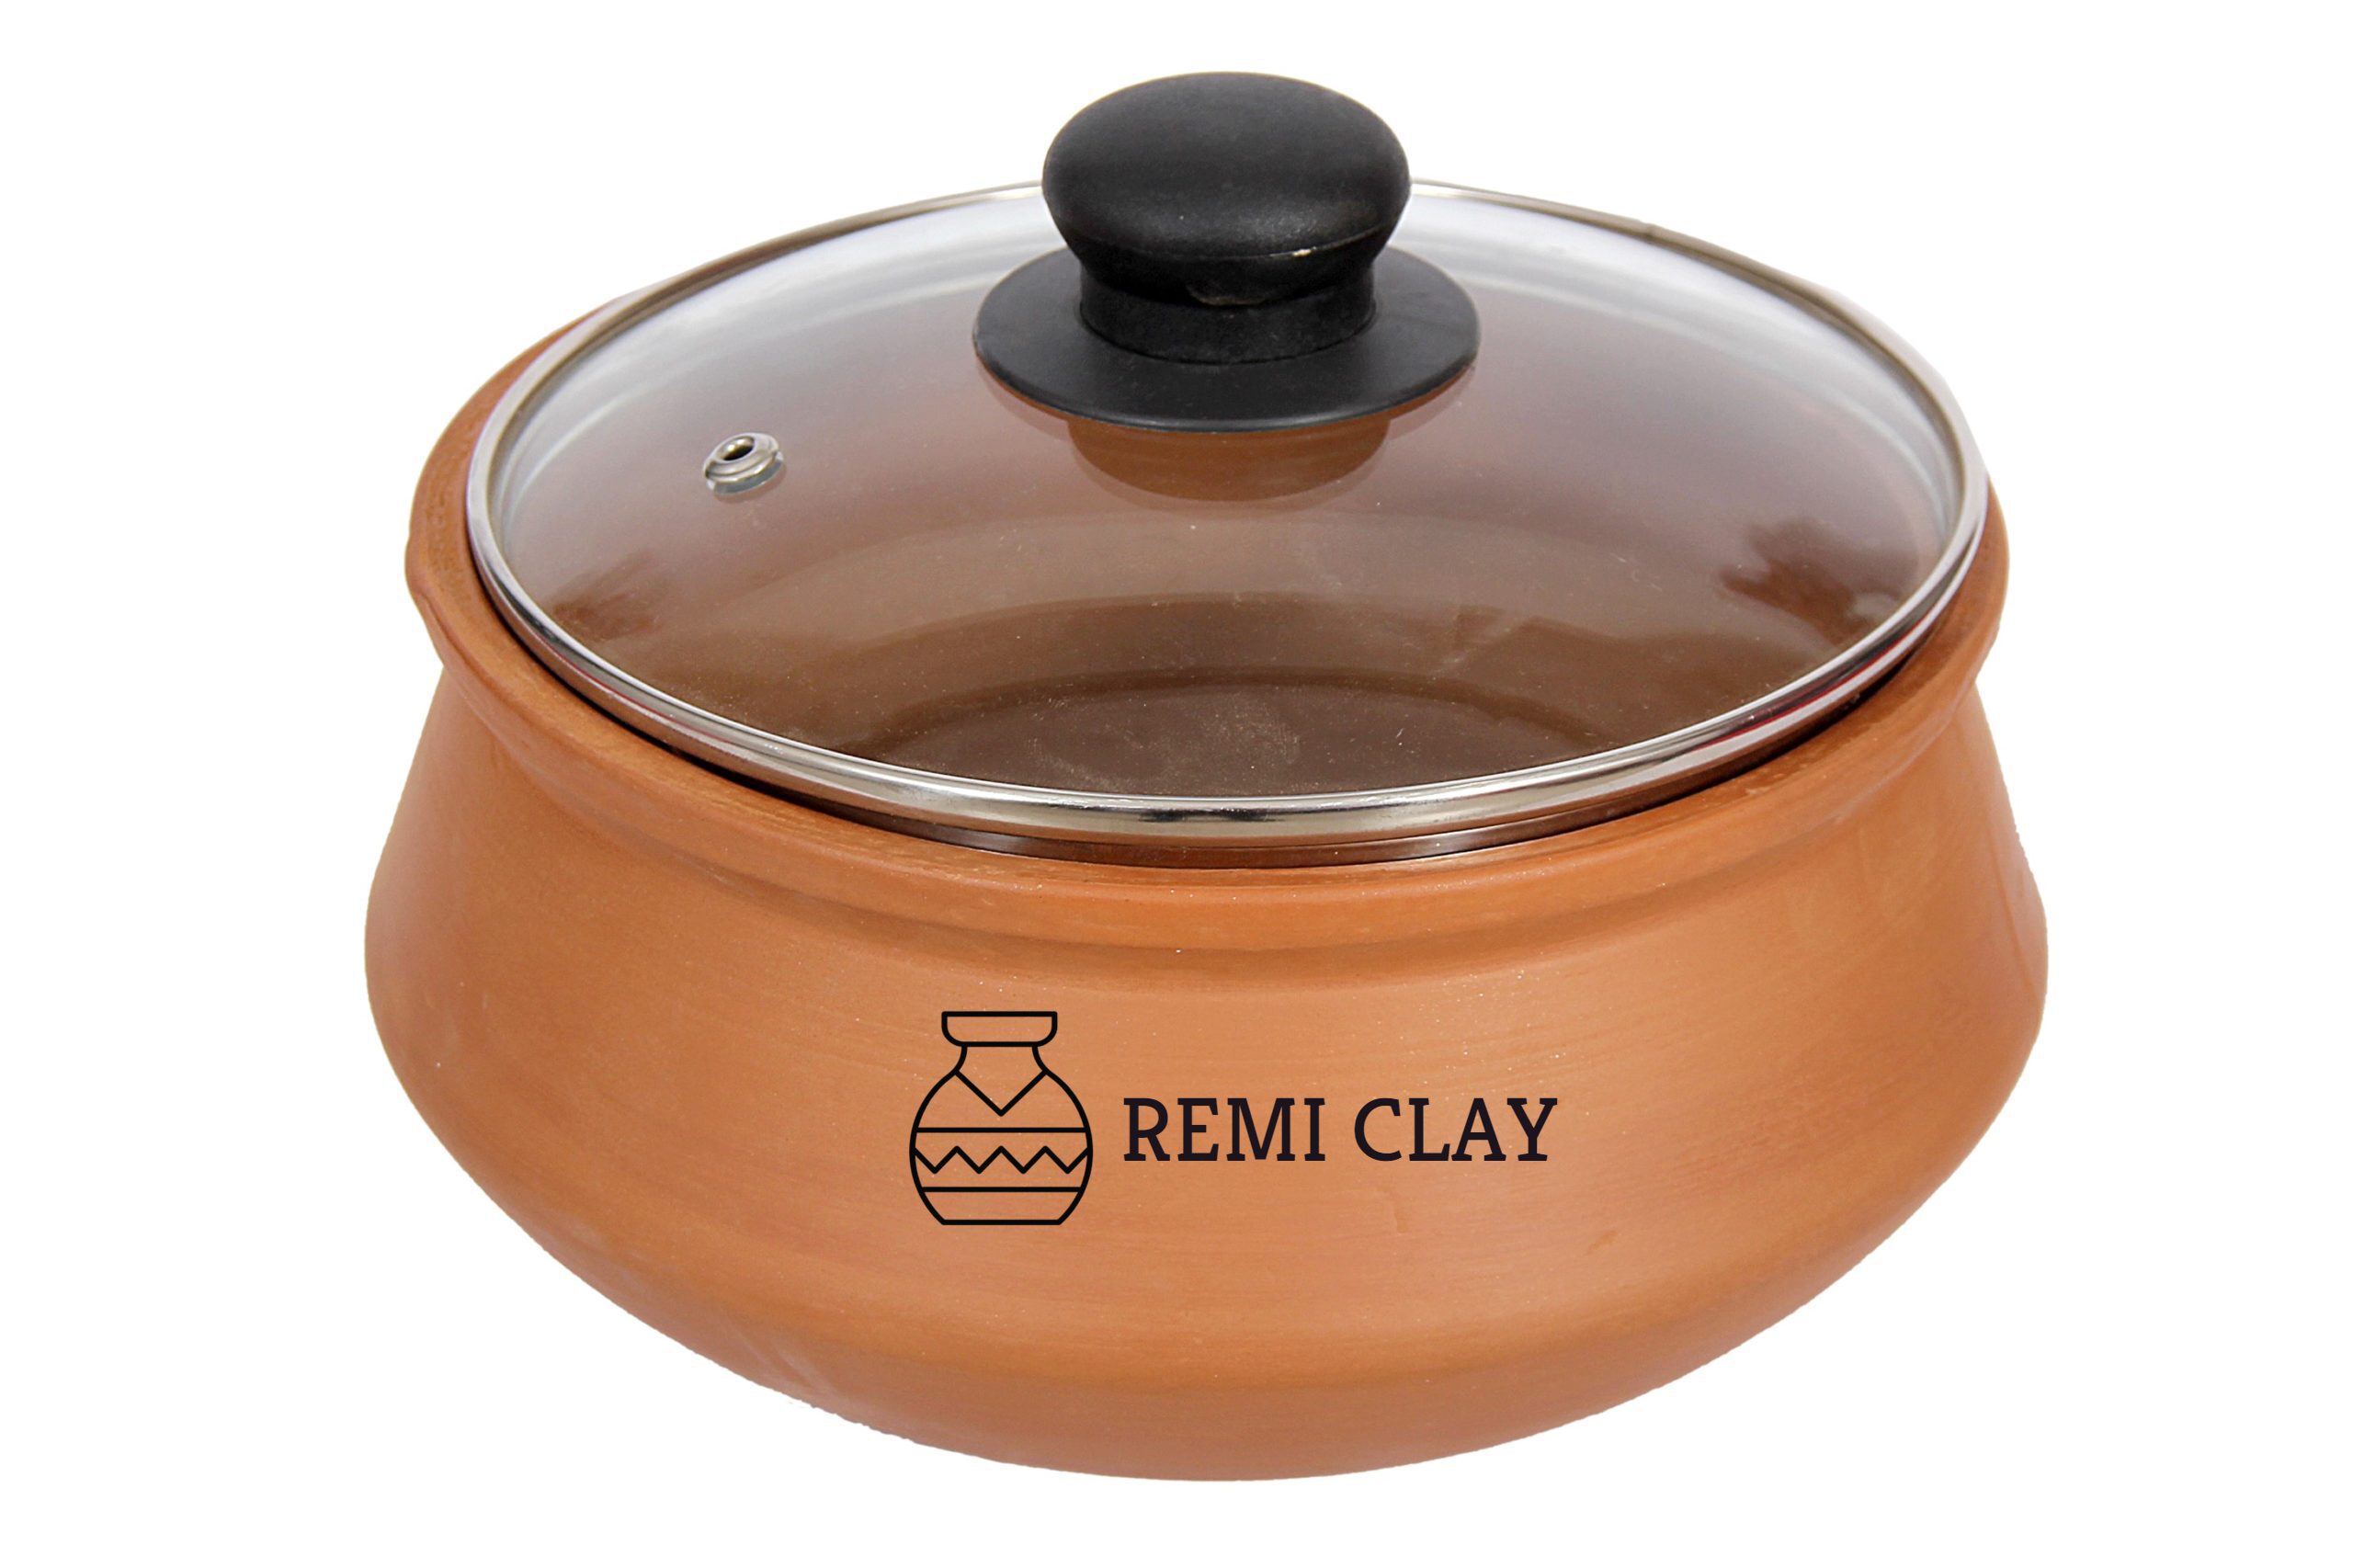 Clay-briyani-handi-with-glass-lid